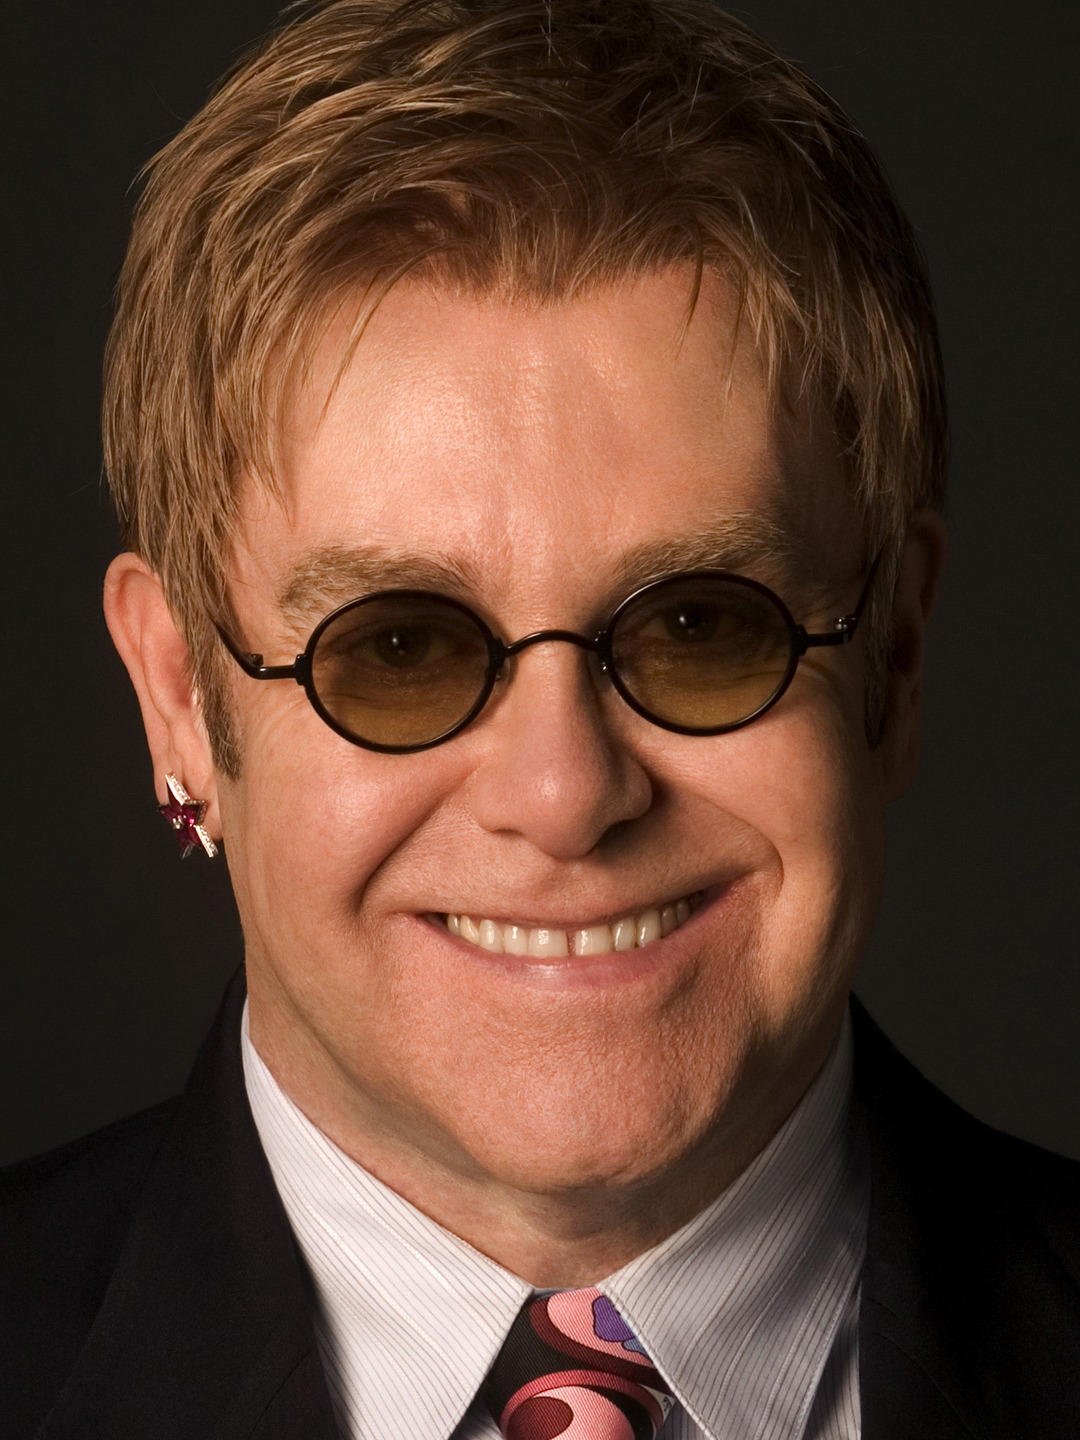 Elton John personal life